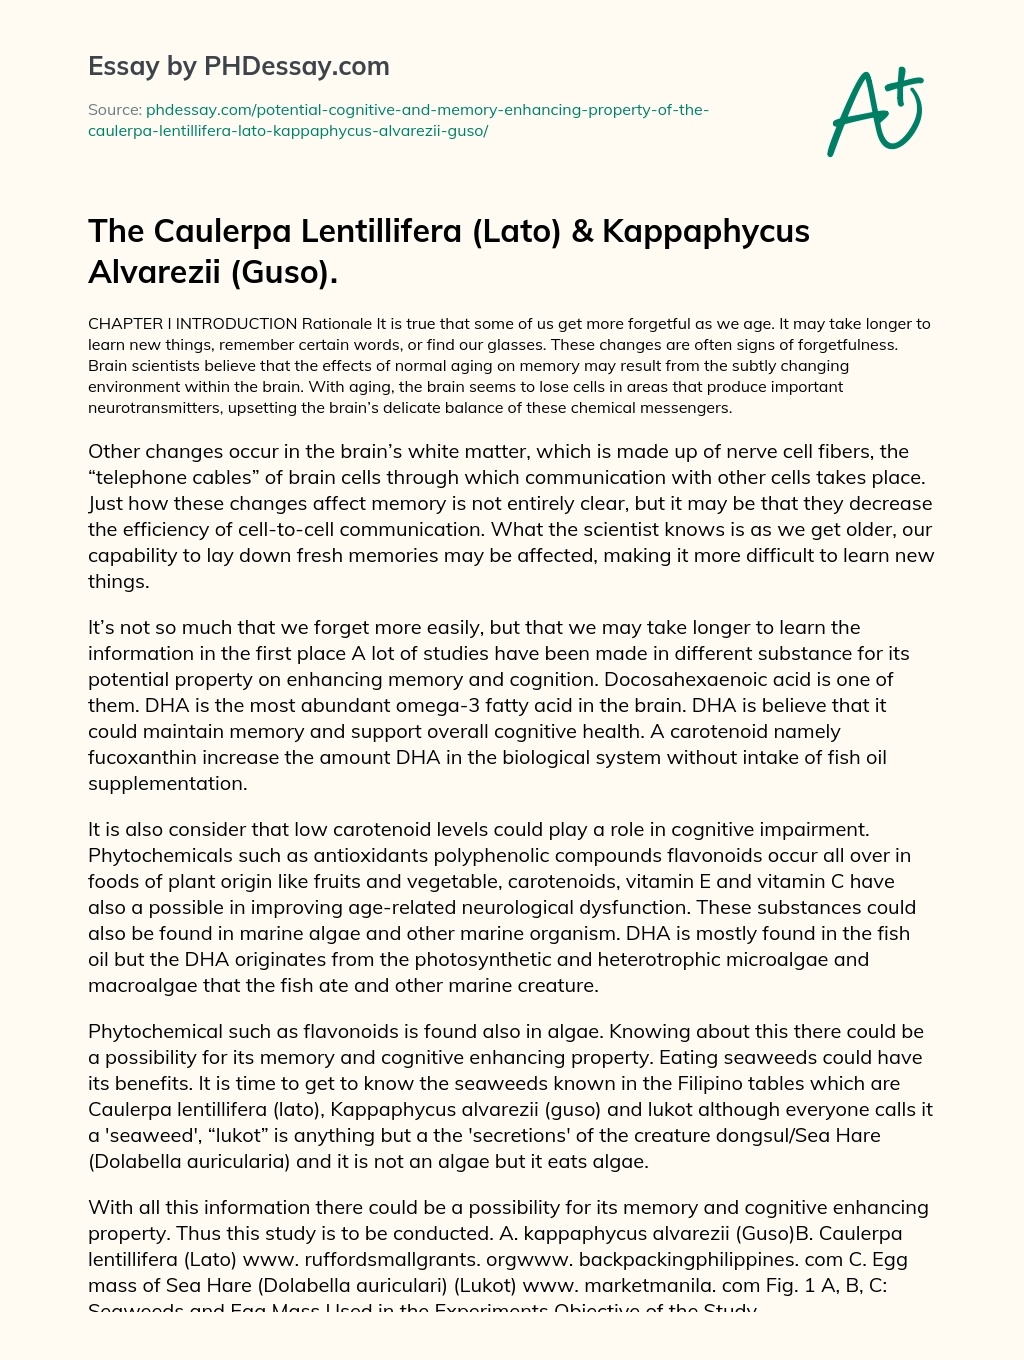 The Caulerpa Lentillifera (Lato) & Kappaphycus Alvarezii (Guso) Effect on Memory essay